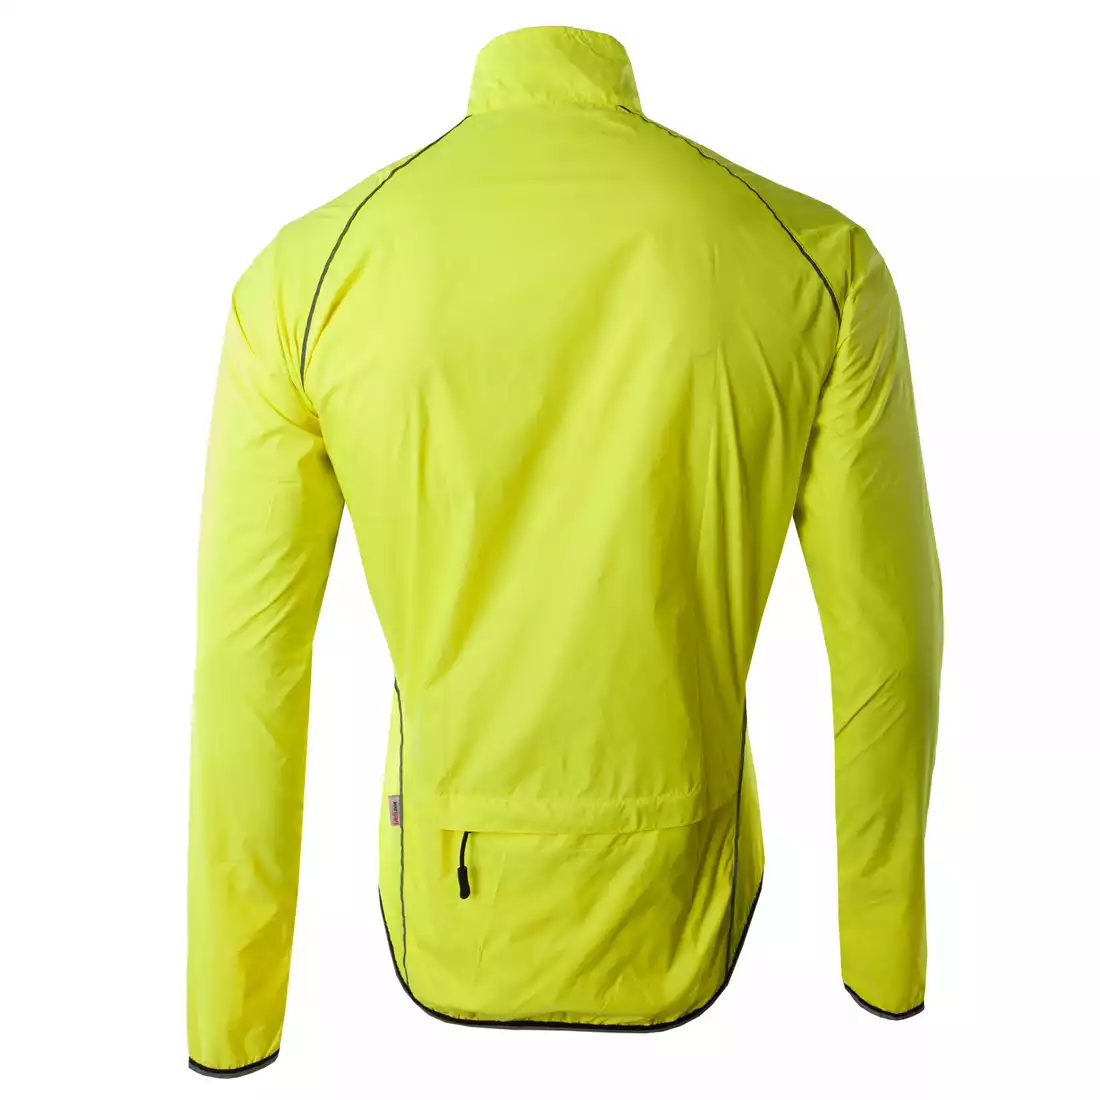 KAYMAQ JACM-001 Men's Lightweight Cycling Windcheater, yellow